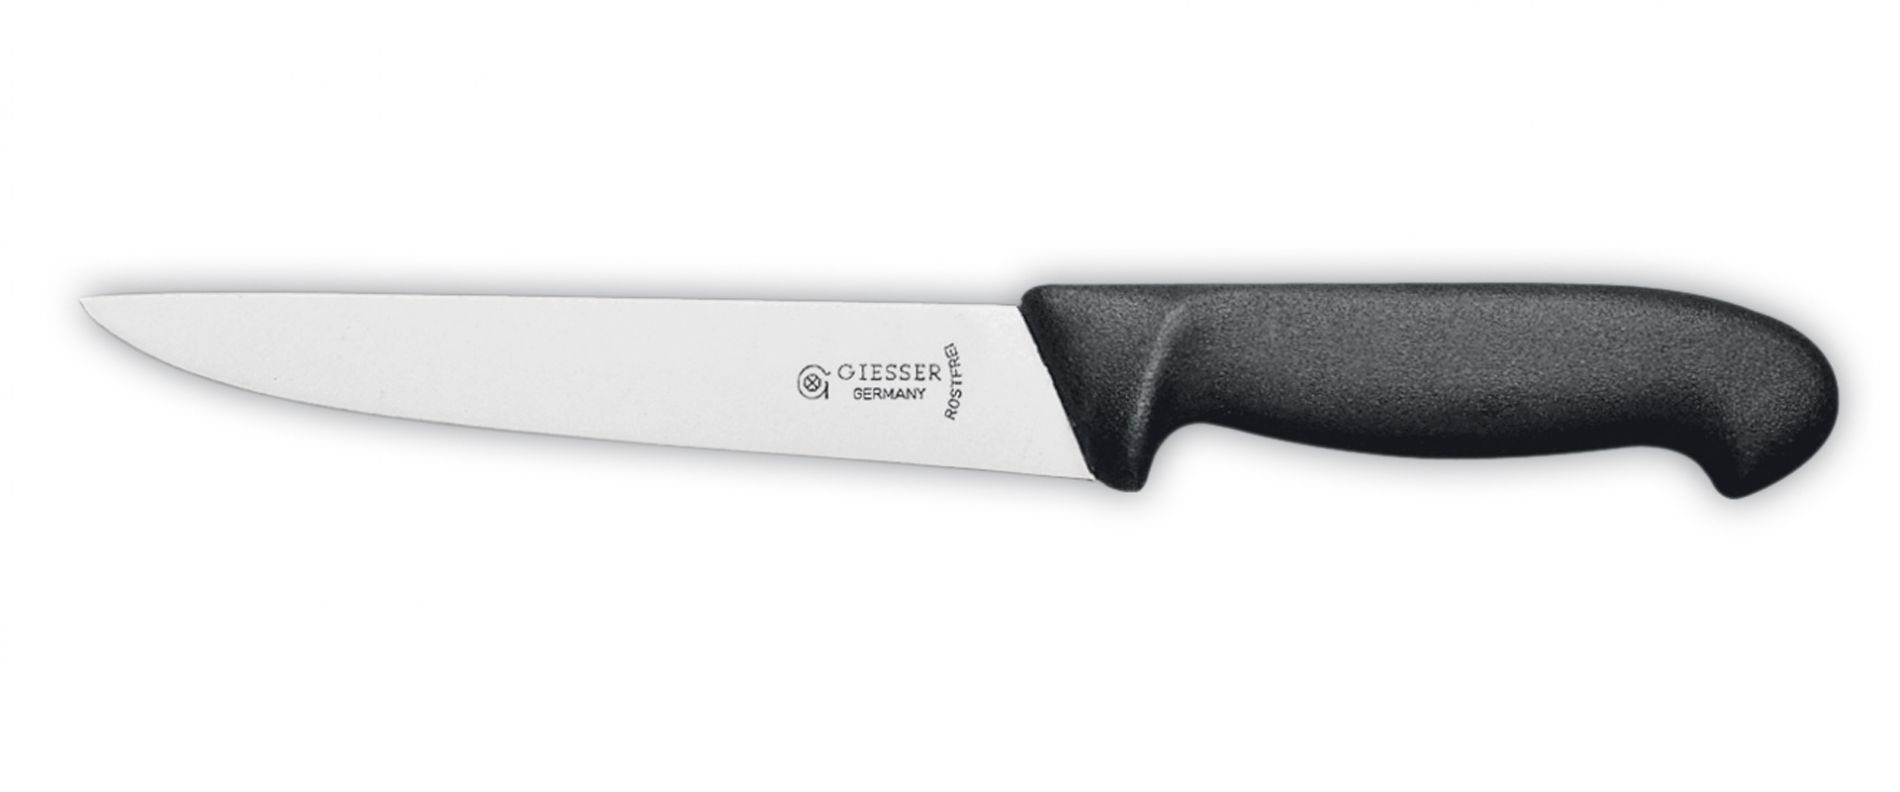 Cuchillo GIESSER para pinchar, hoja 13cm, ancha, rígida, mango clásico,  negro